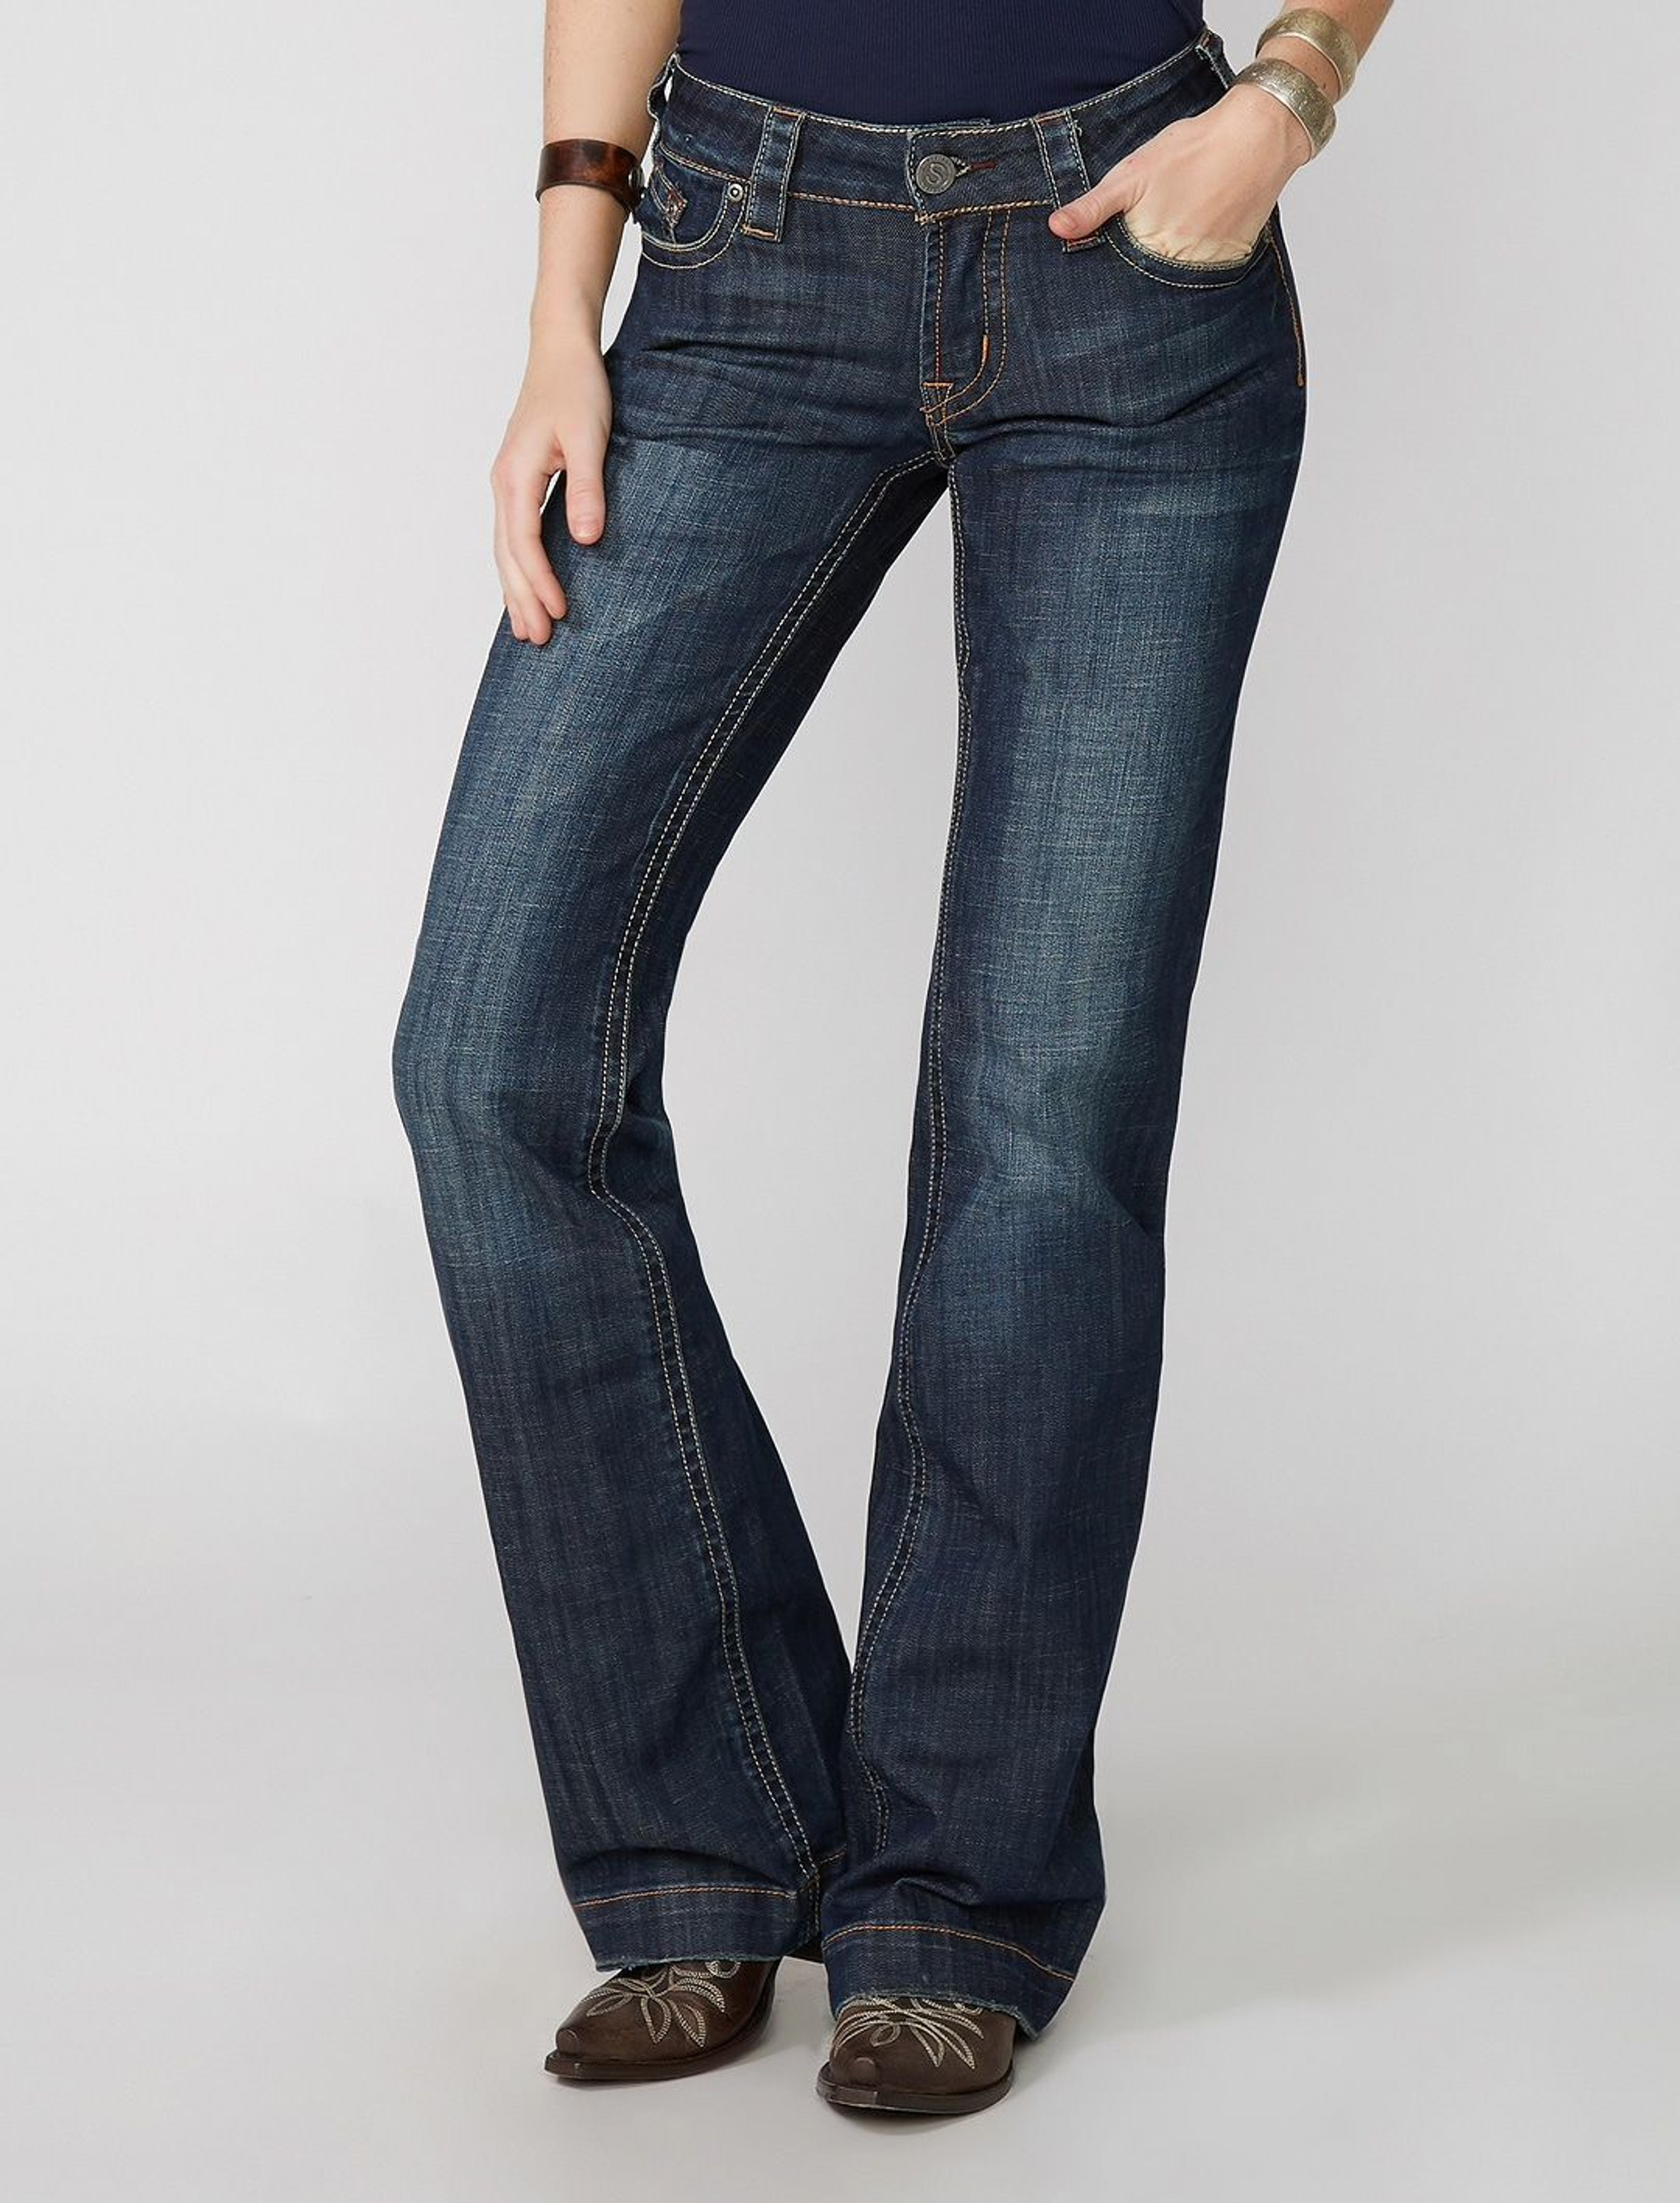 Stetson 214 City Trouser Jeans In Medium Wash - 11-054-0214-0200 - Leon ...